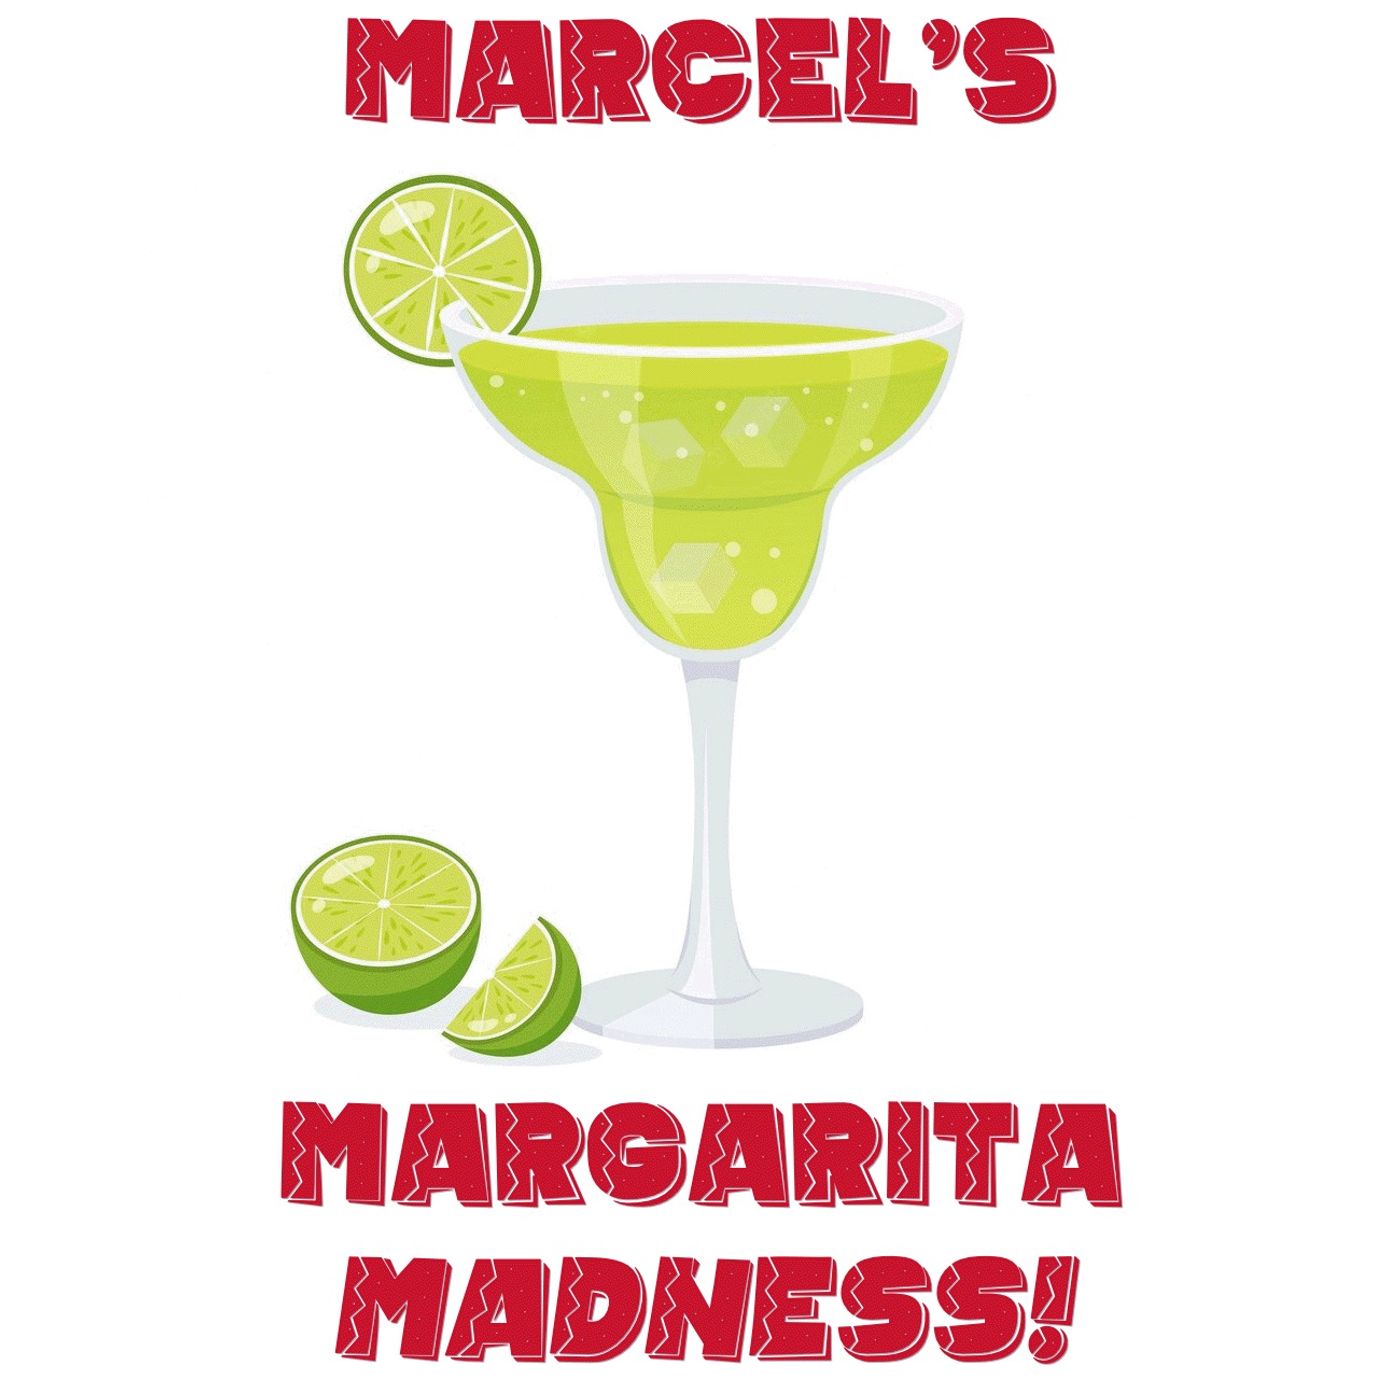 Marcel's Margarita Madness